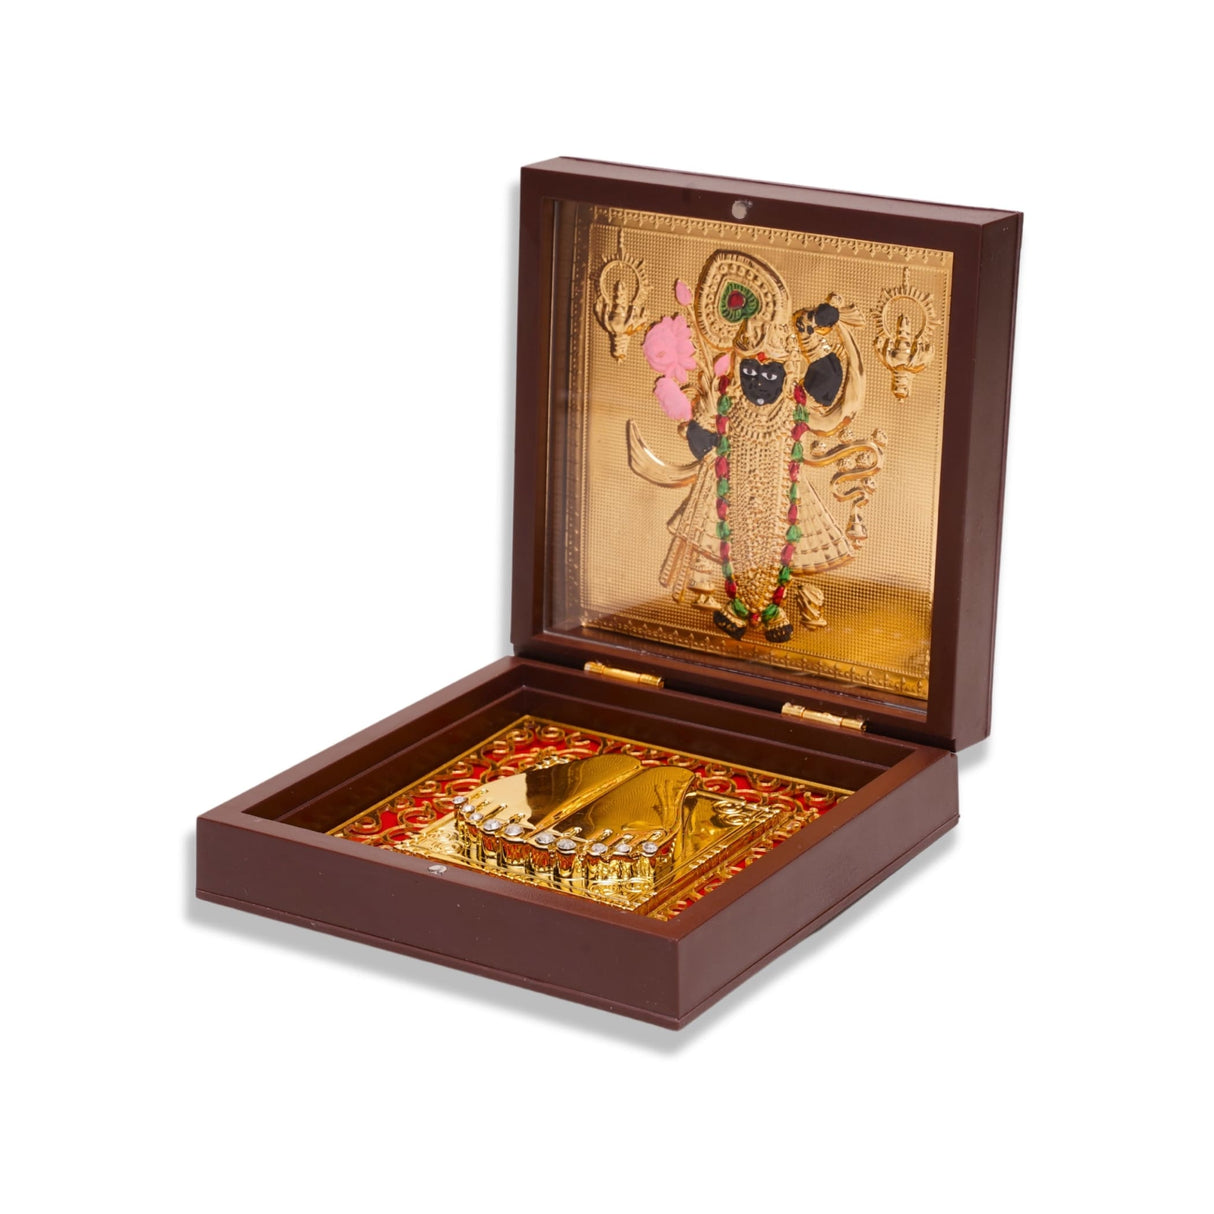 Gold plated shri nath ji photo frame with charan paduka